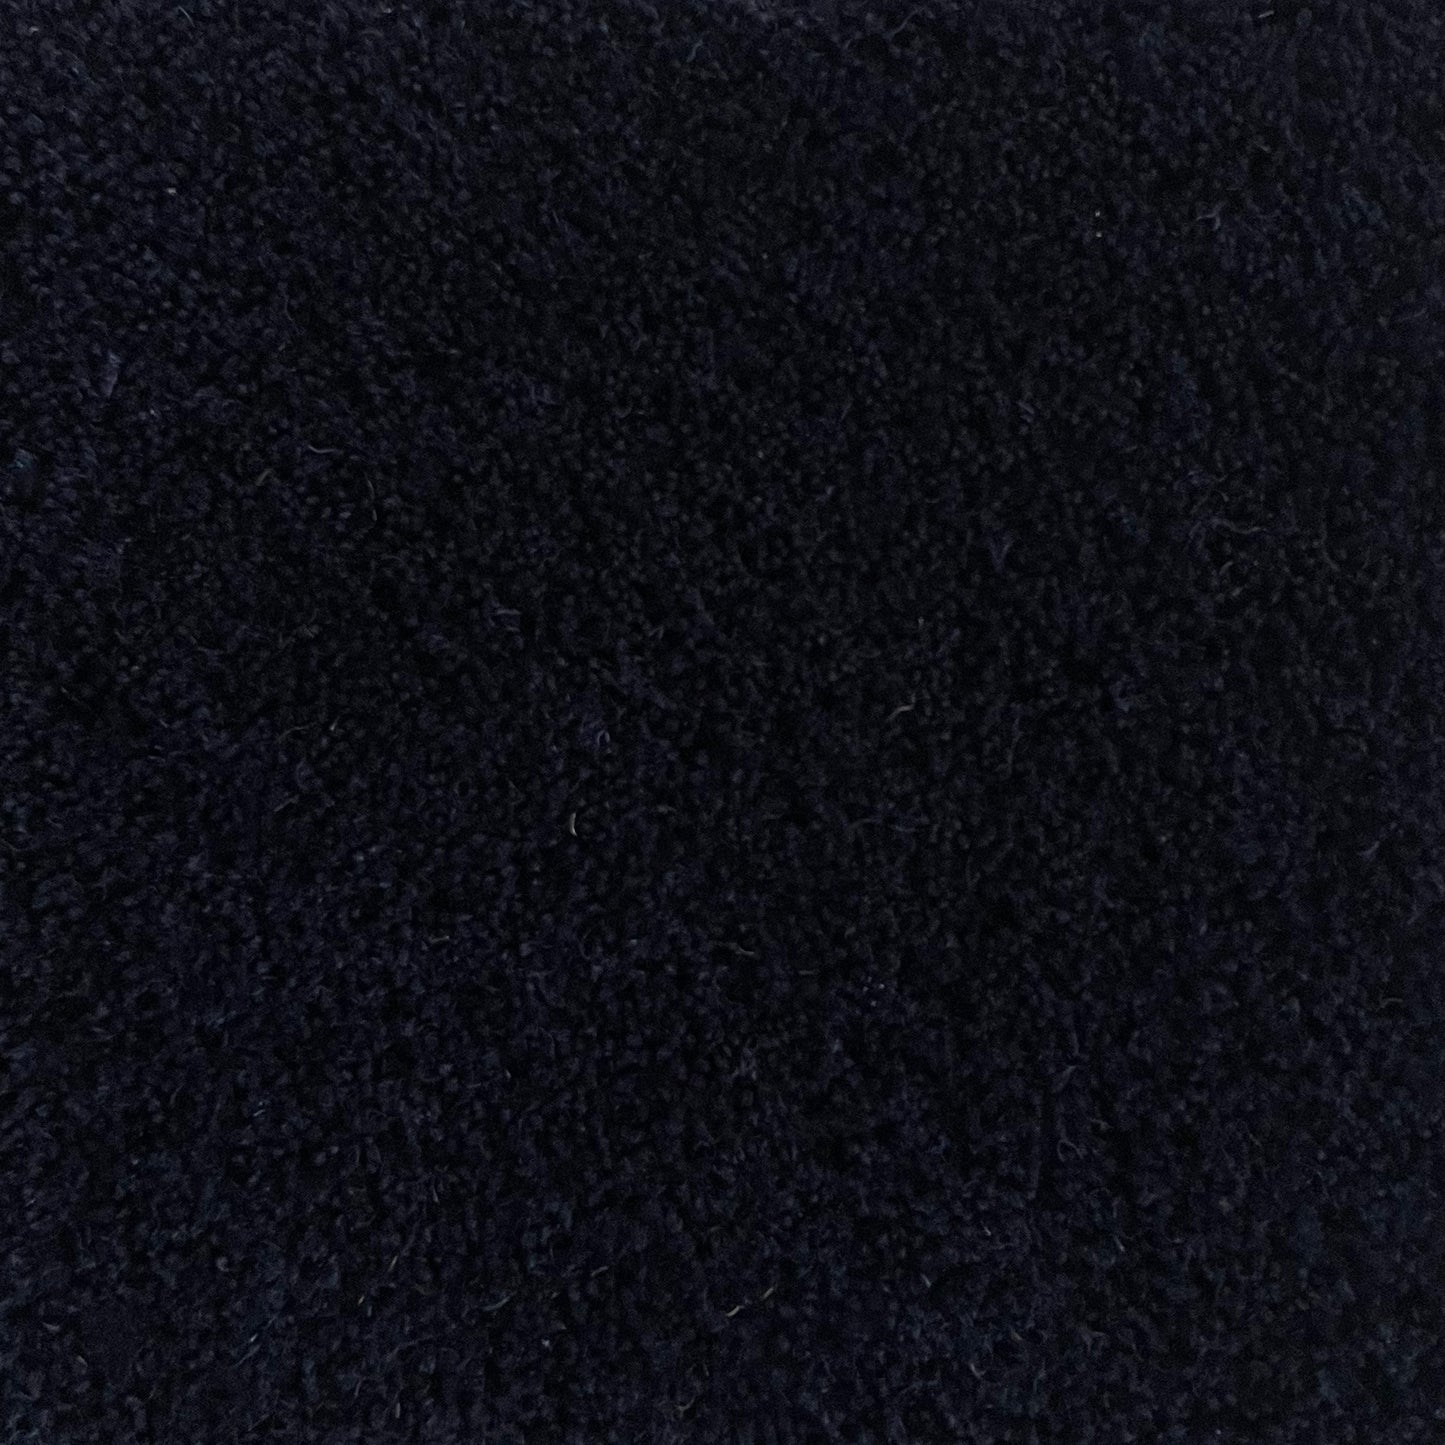 100% New Zealand Wool Rug Swatch in Dark Blue